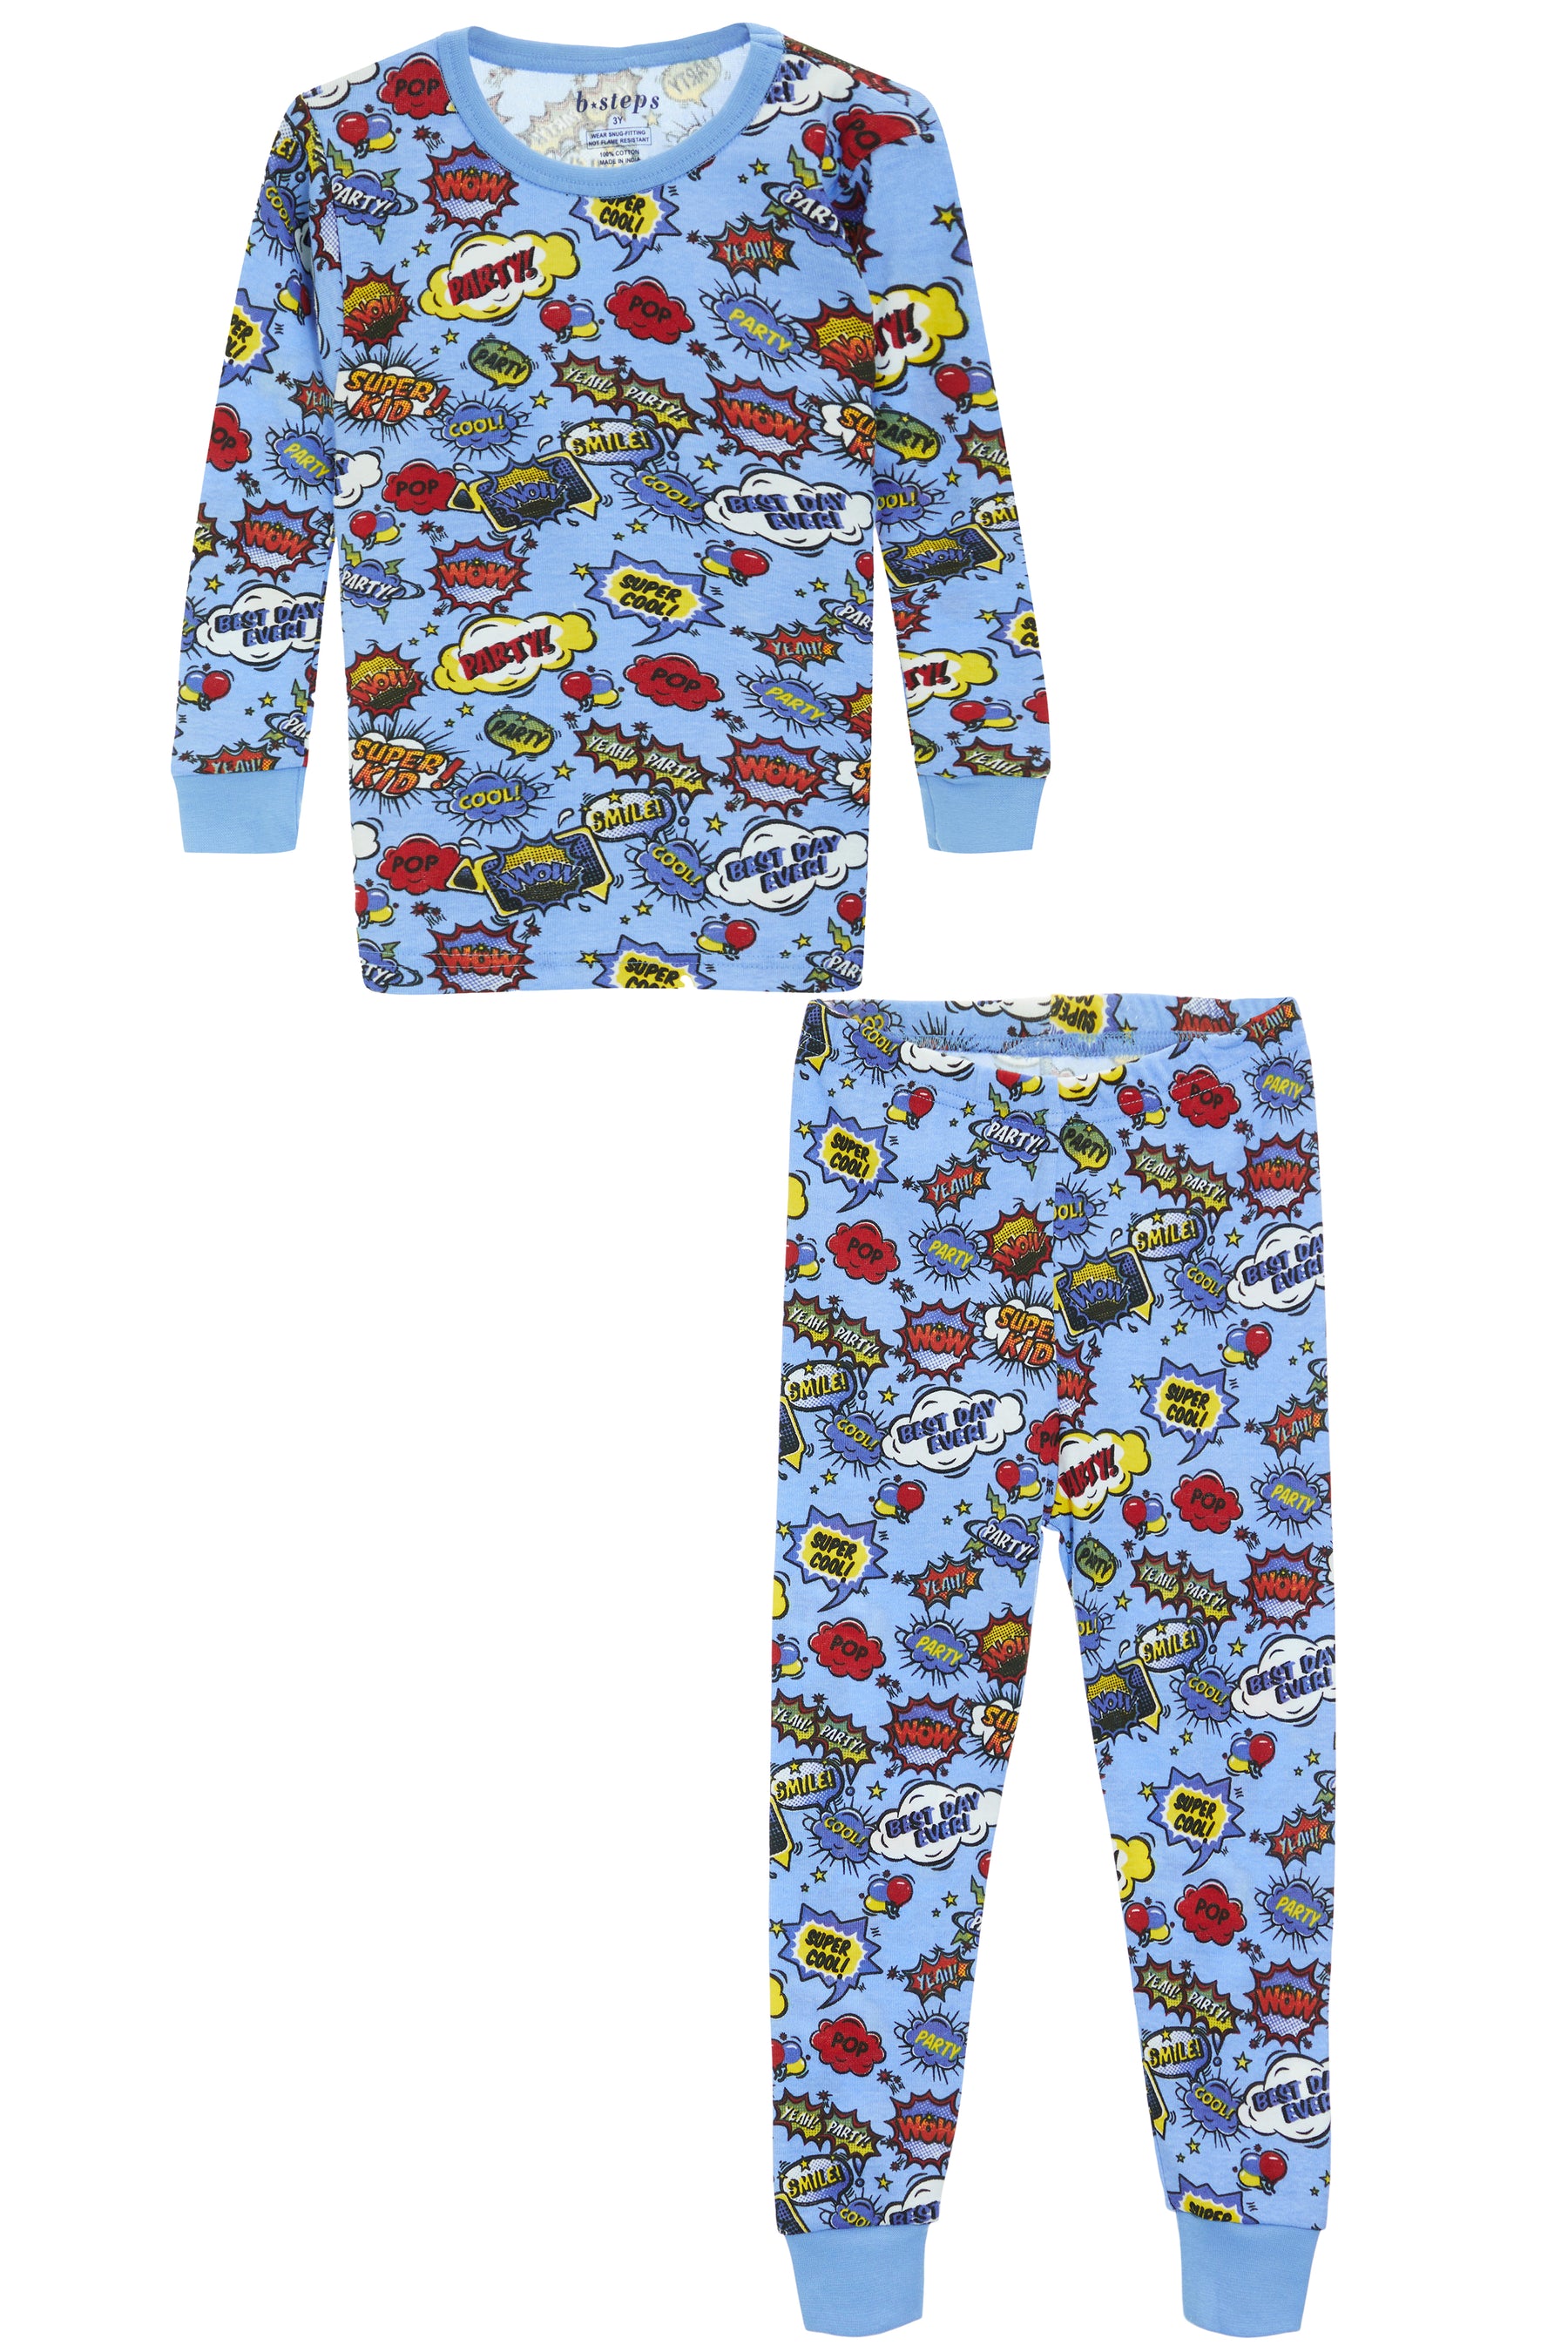 Comic Party Two Piece Pajama Set